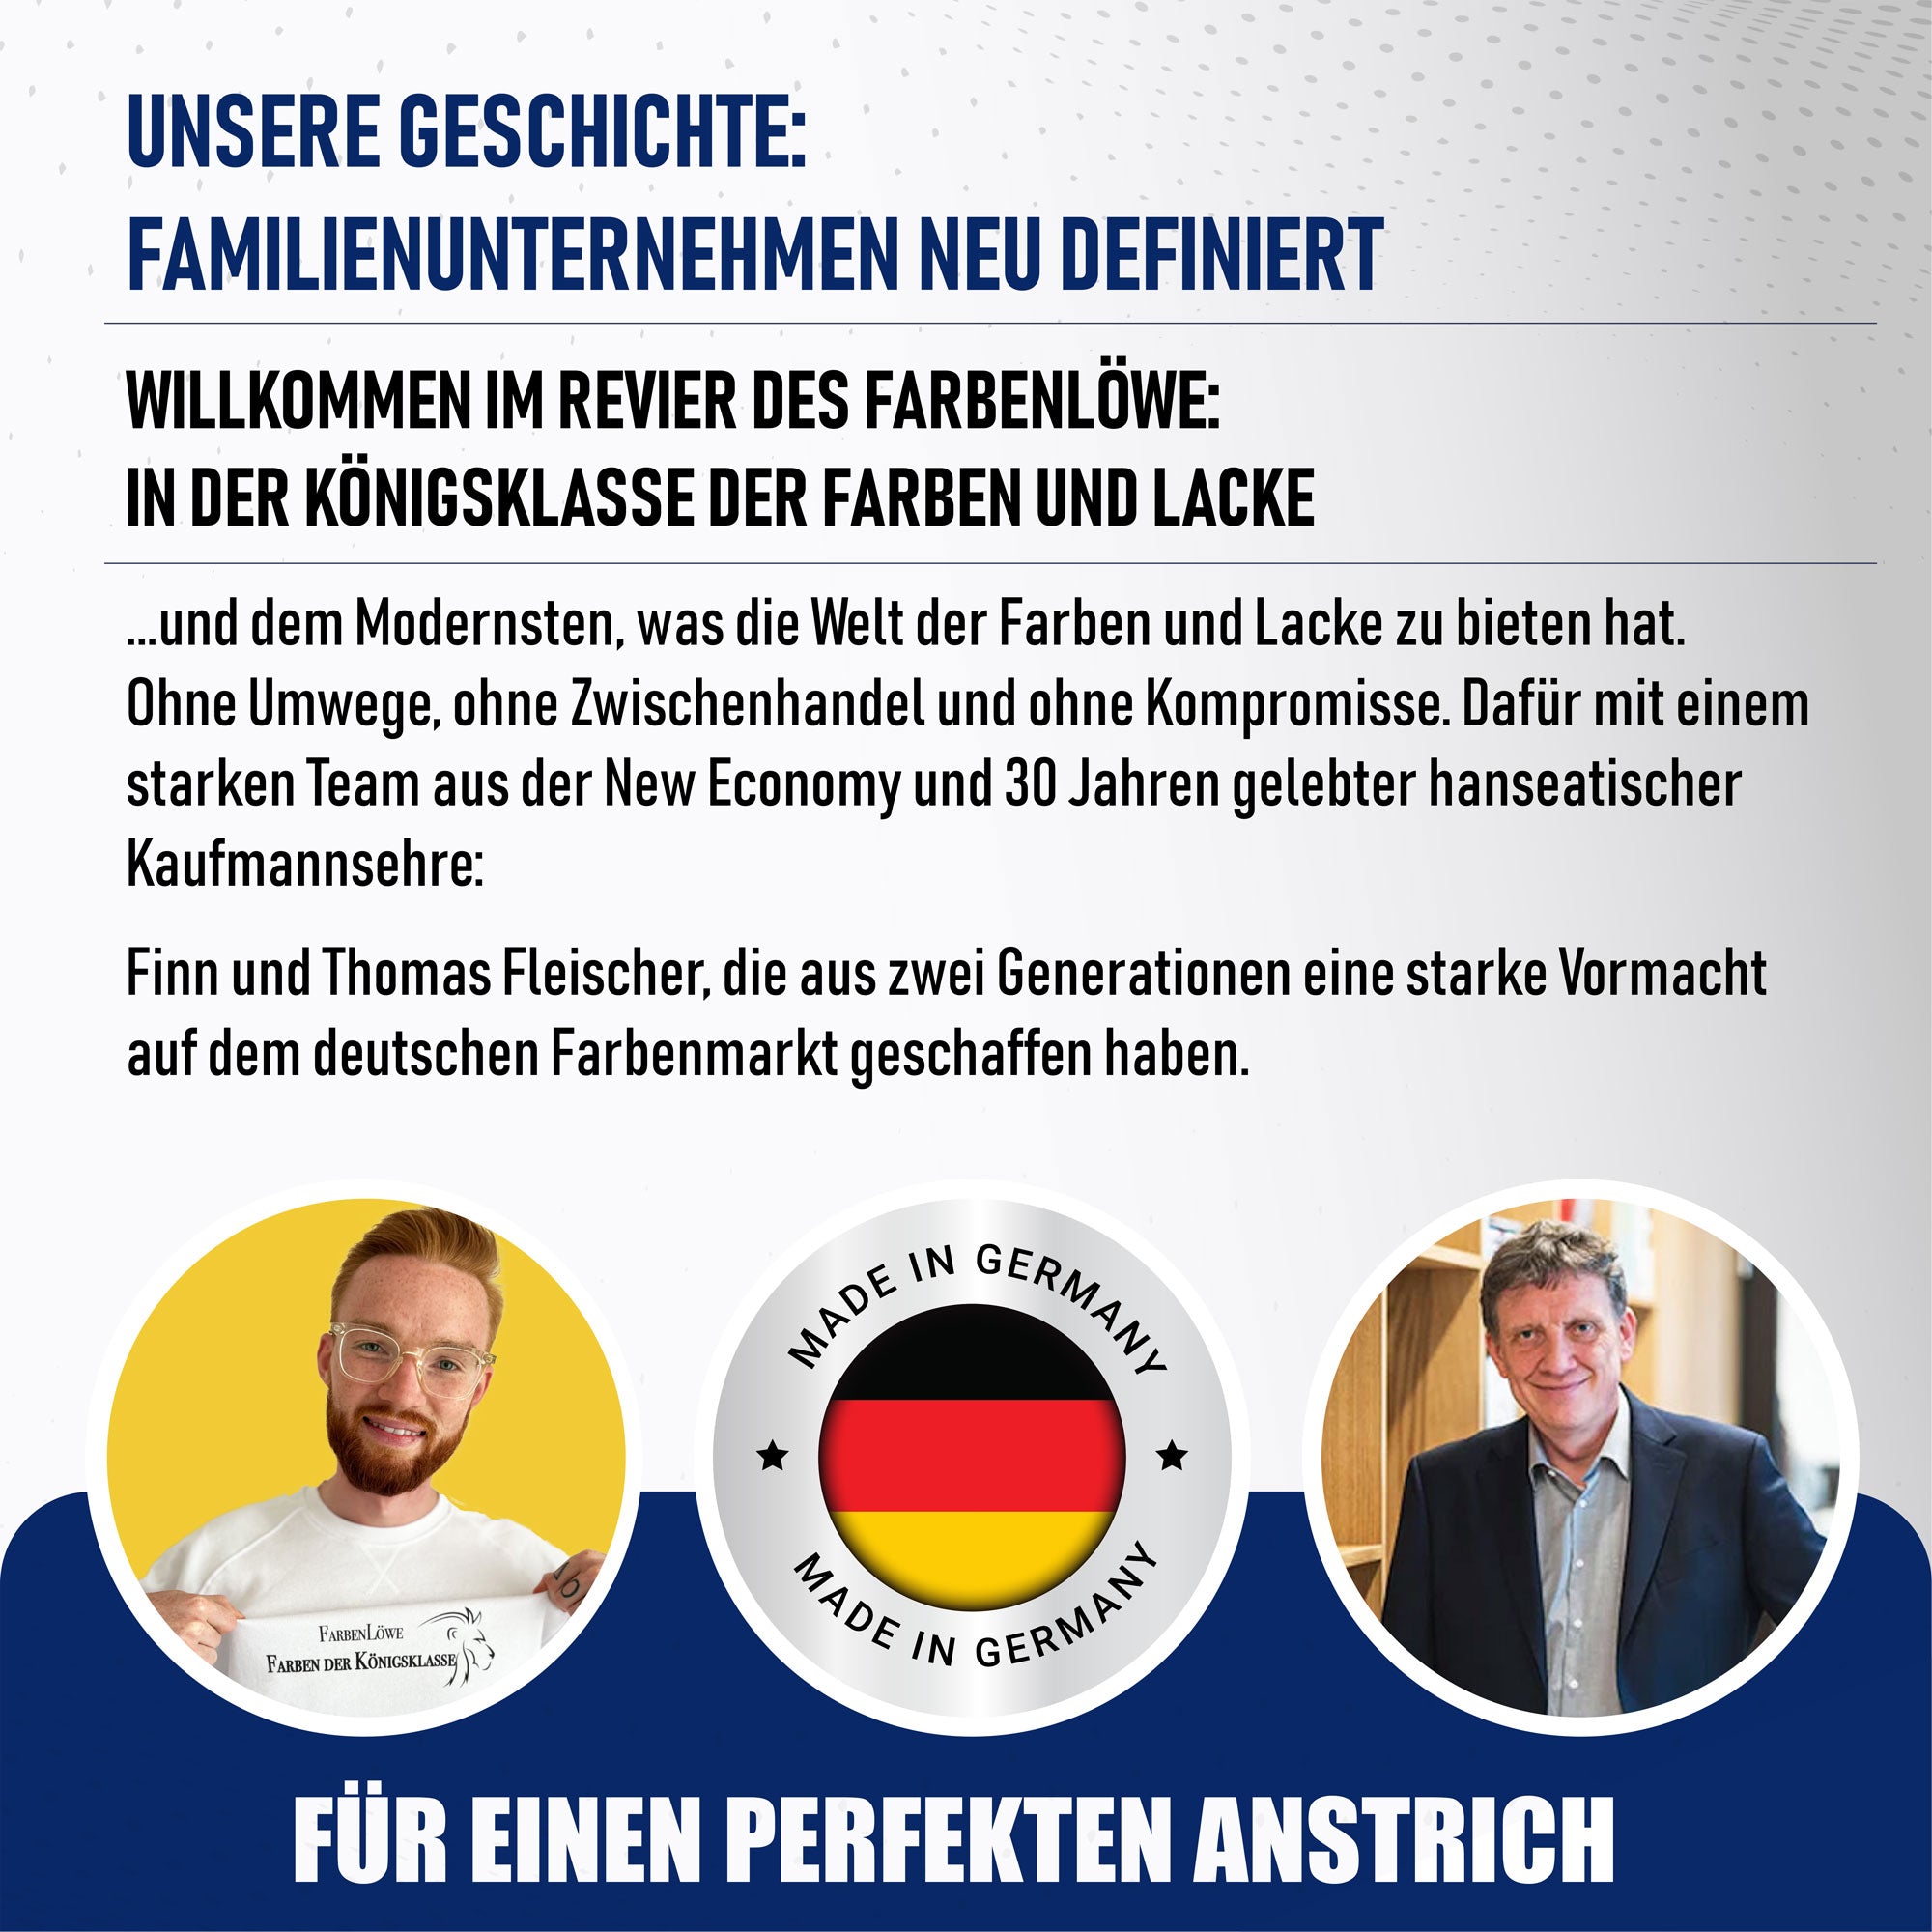 Hamburger Lack-Profi 2K Autolack in Himmelblau RAL 5015 mit Lackierset (X300) & Verdünnung (1 L) - 30% Sparangebot